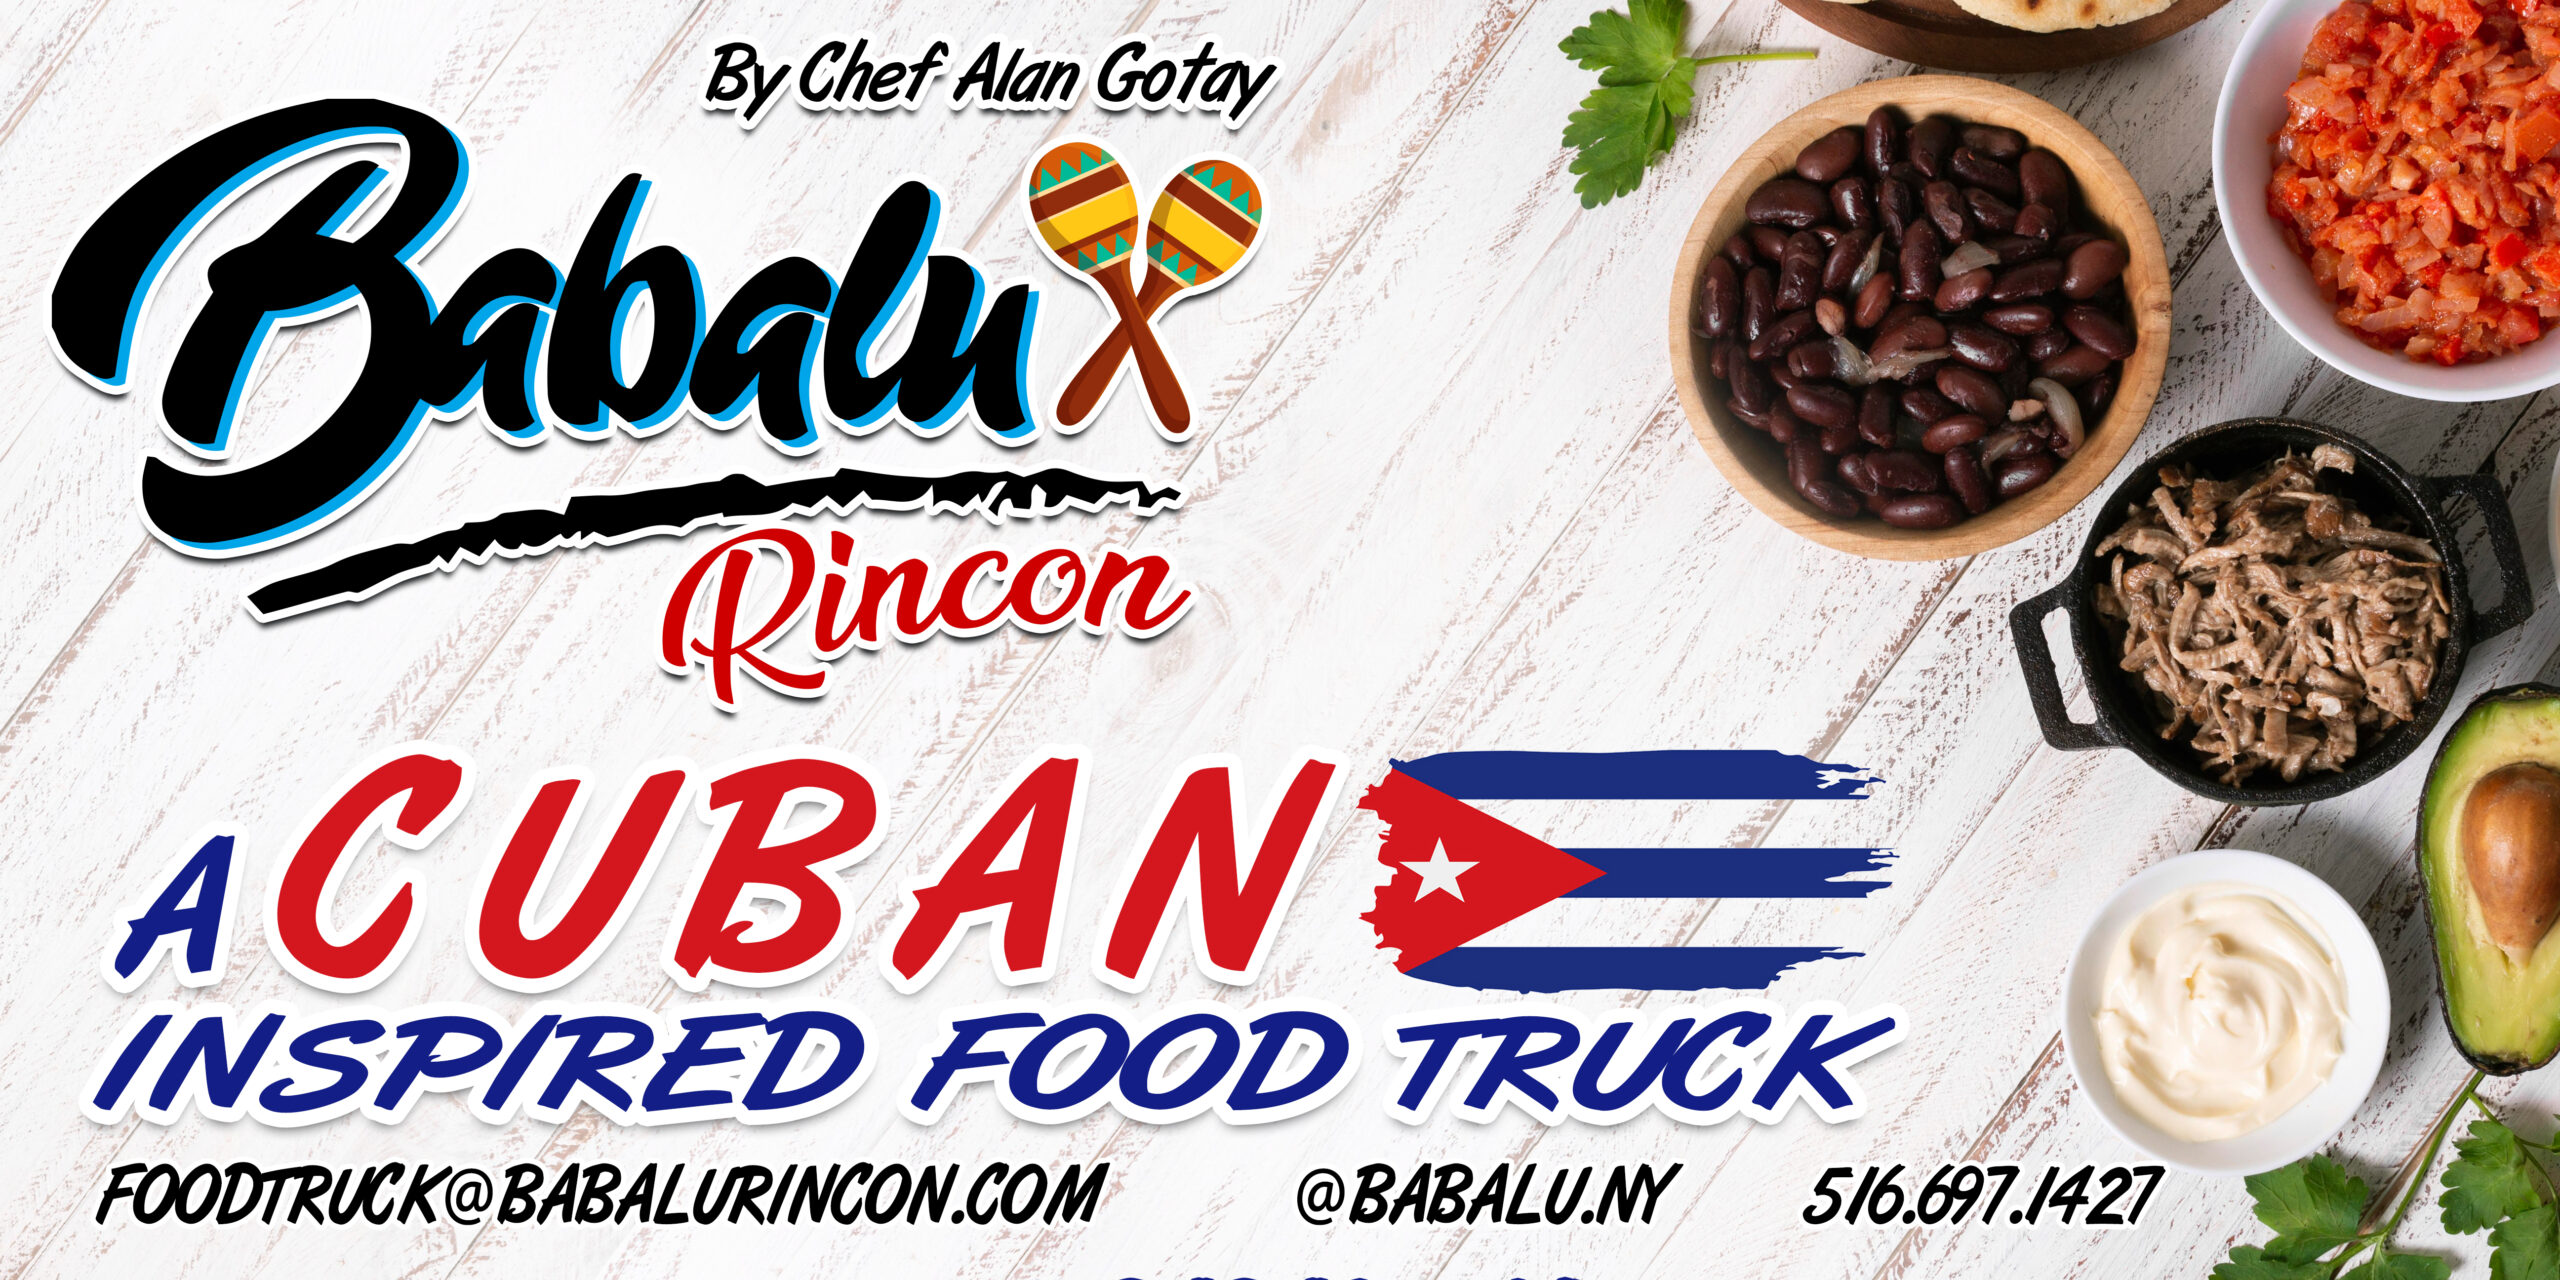 babalurincon cuban inspired food truck